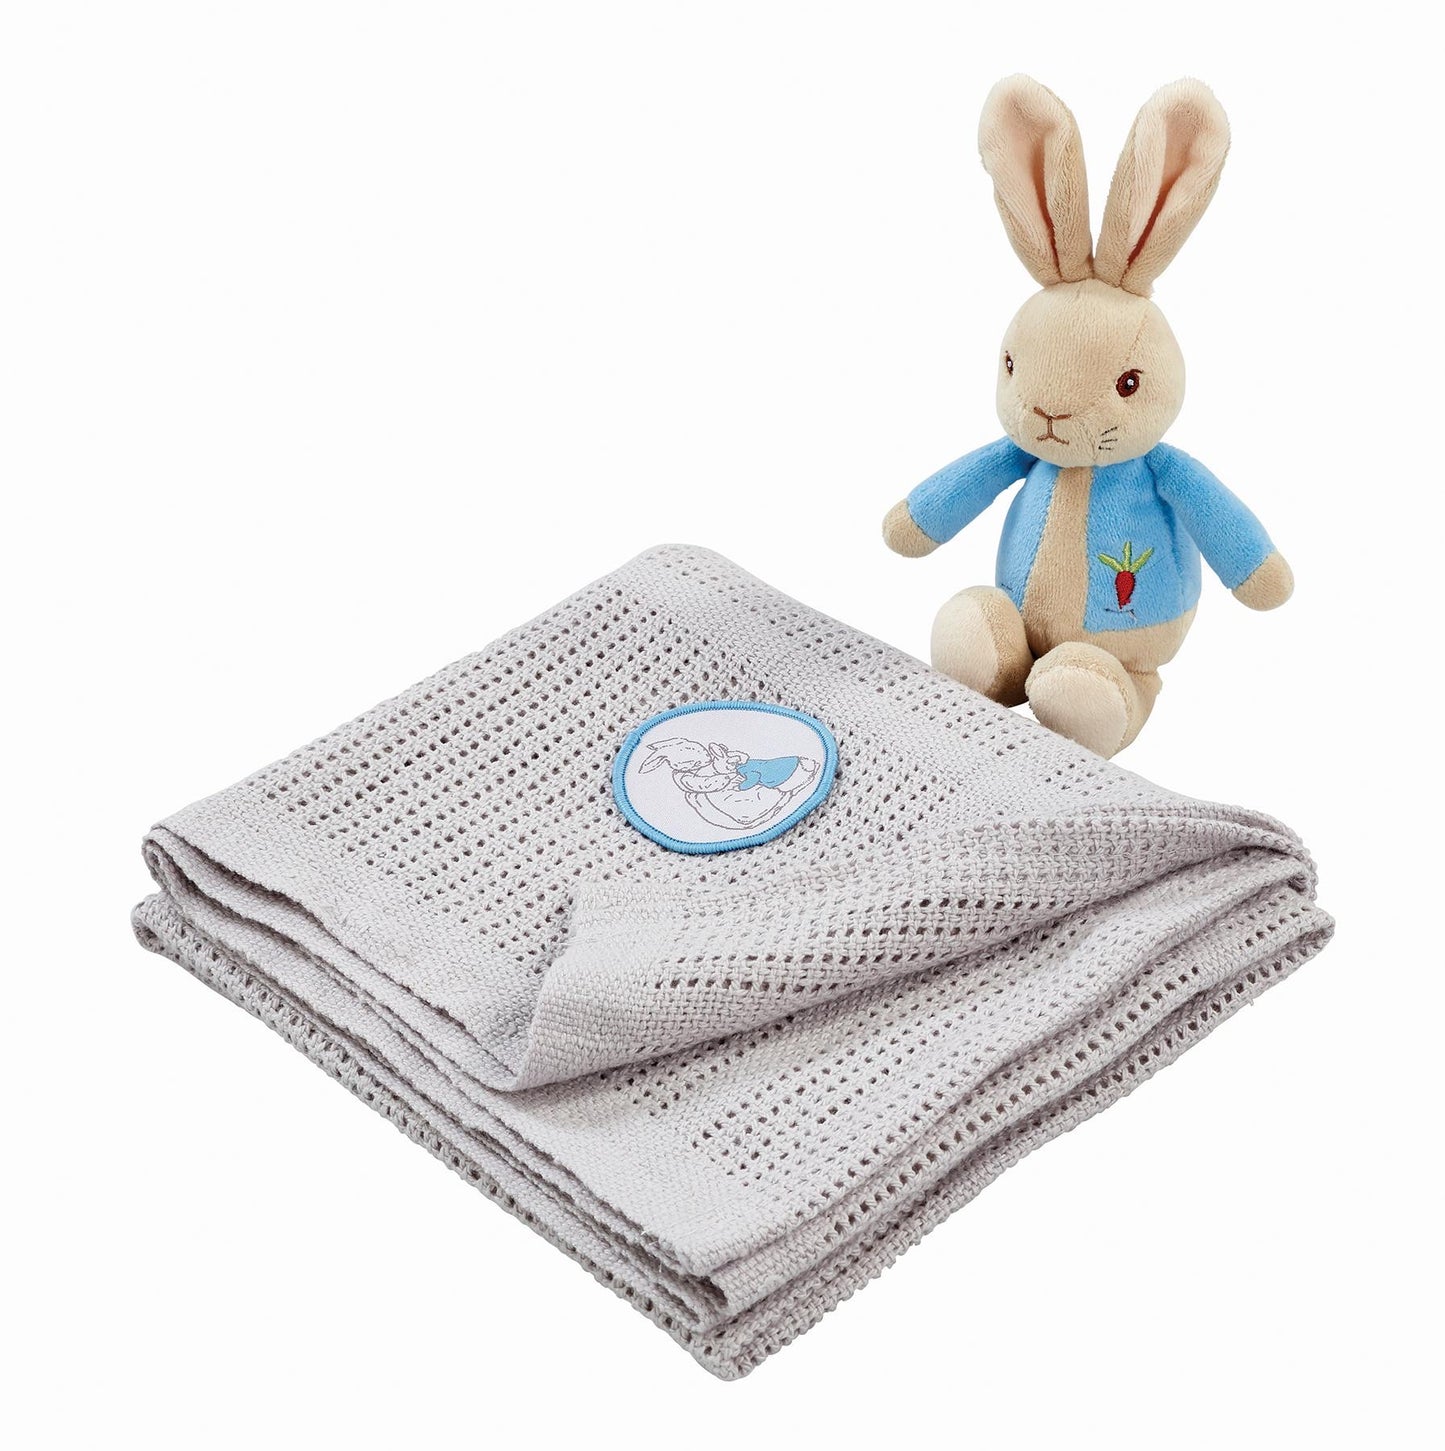 Peter Rabbit Grey Blanket and Toy Set